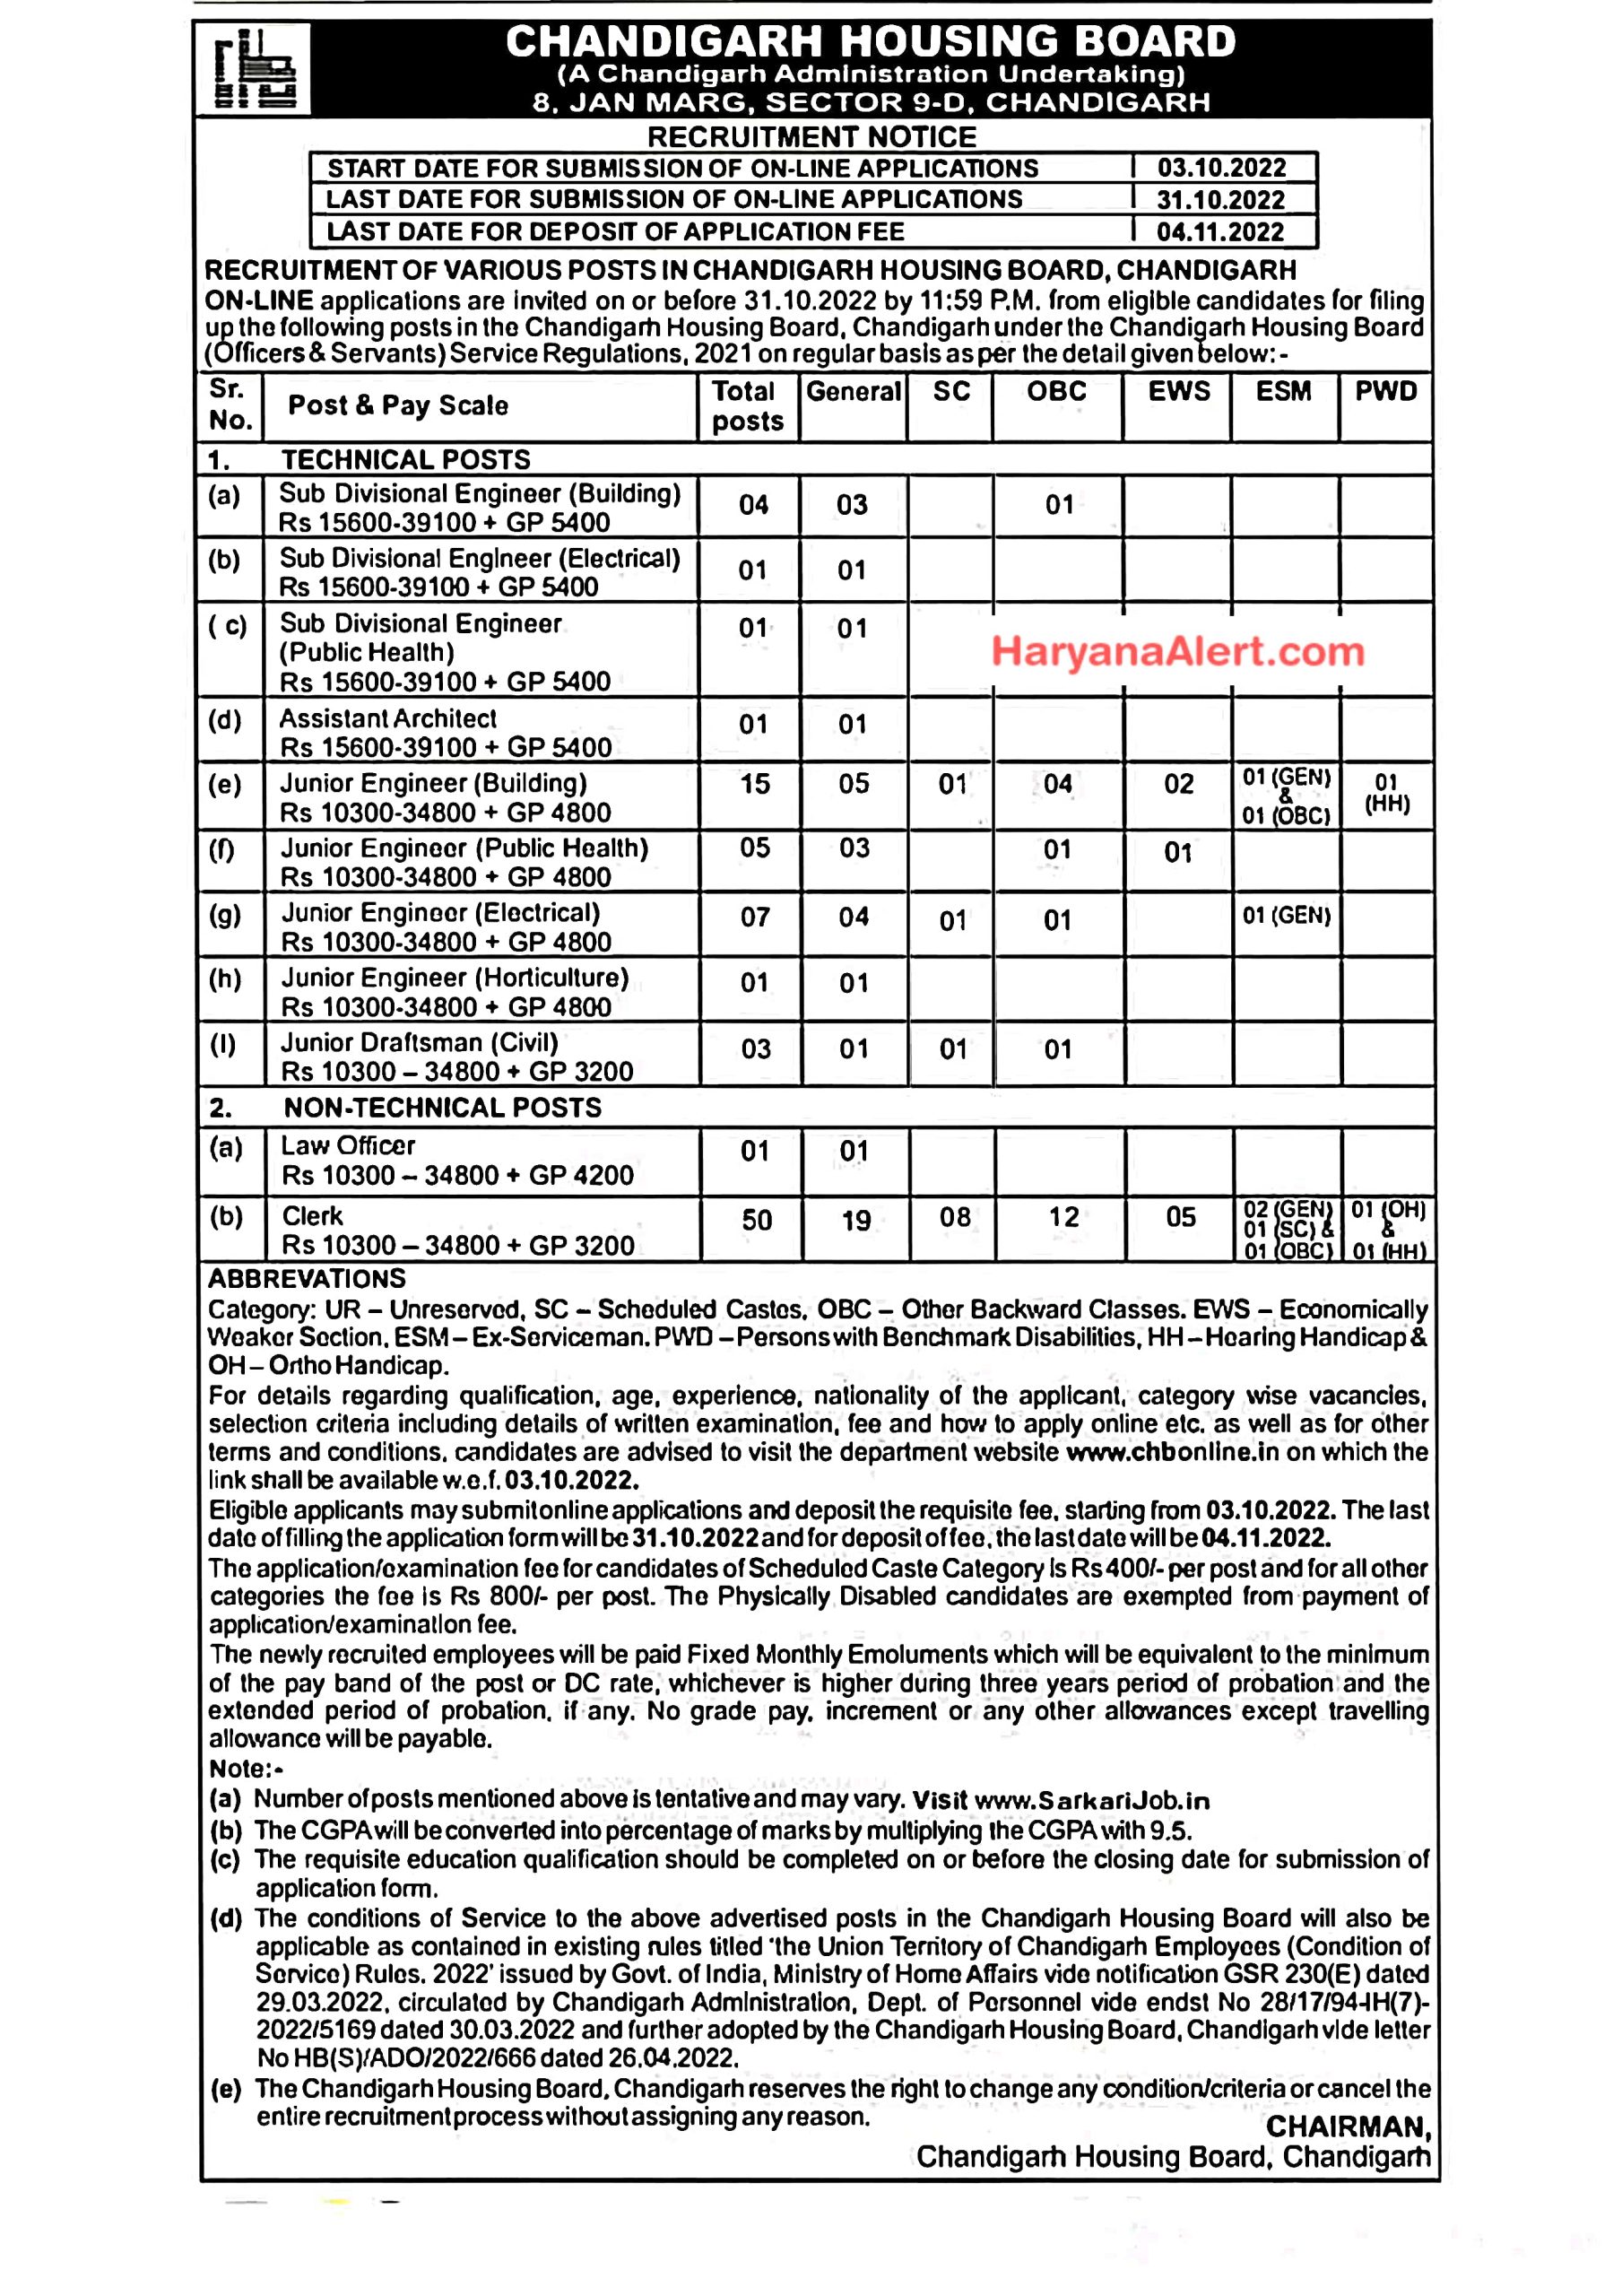 Chandigarh Housing Board Recruitment 2022